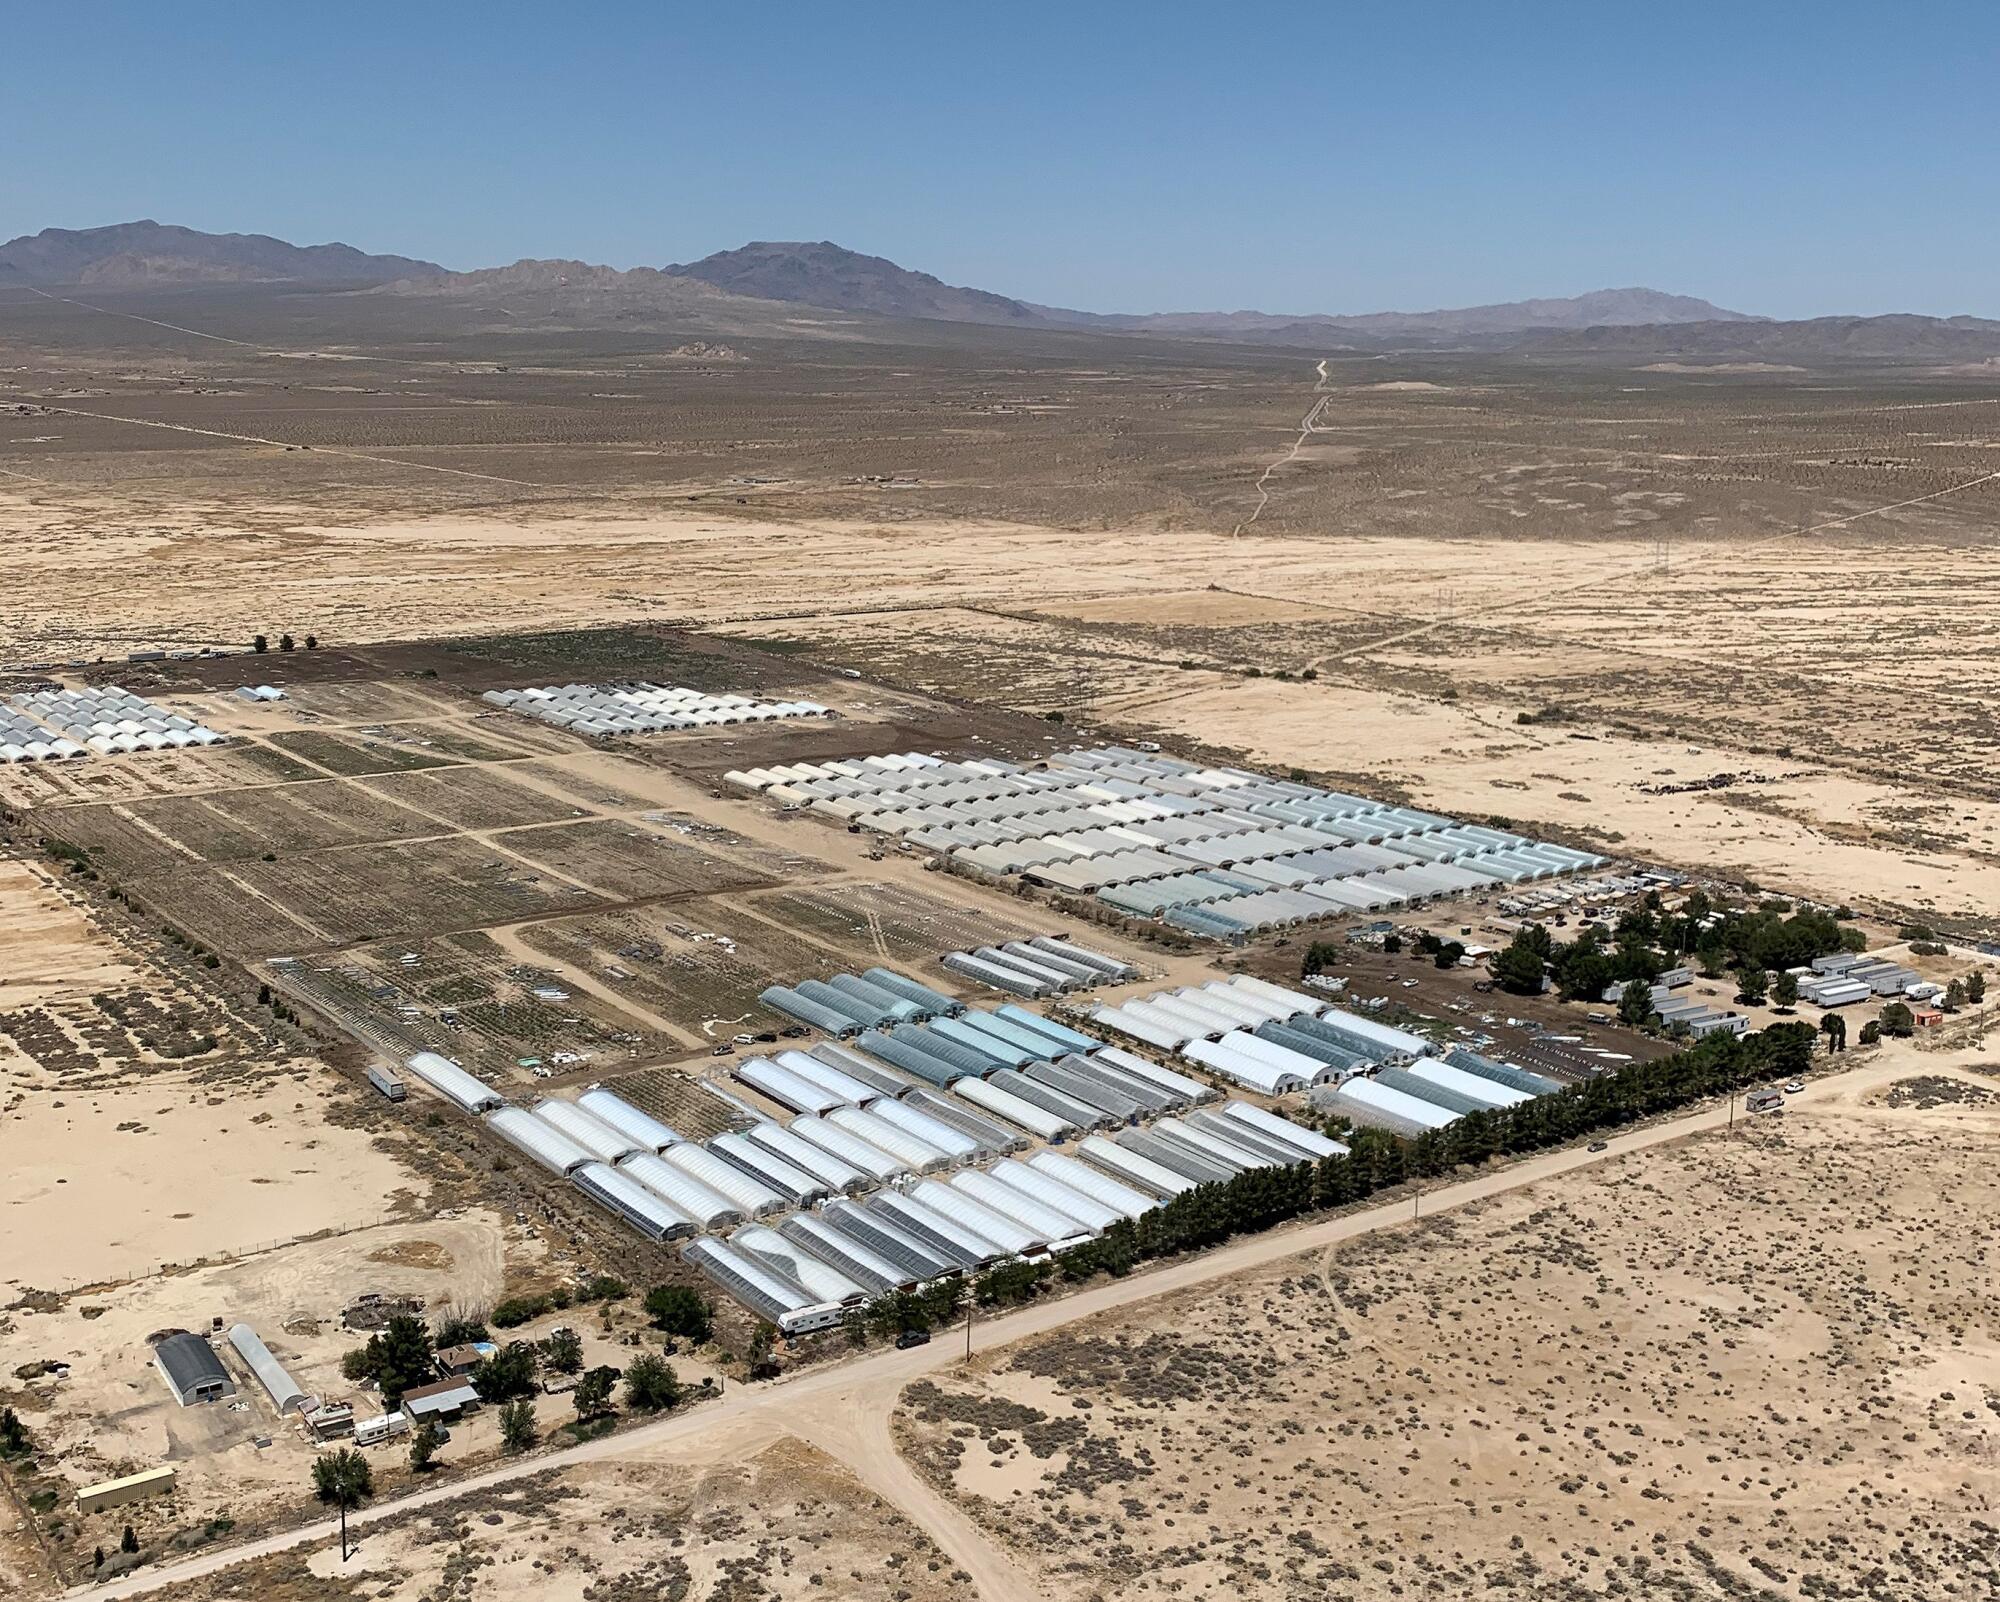 Aerial image of illegal marijuana grow farms discovered in the desert in San Bernardino County.